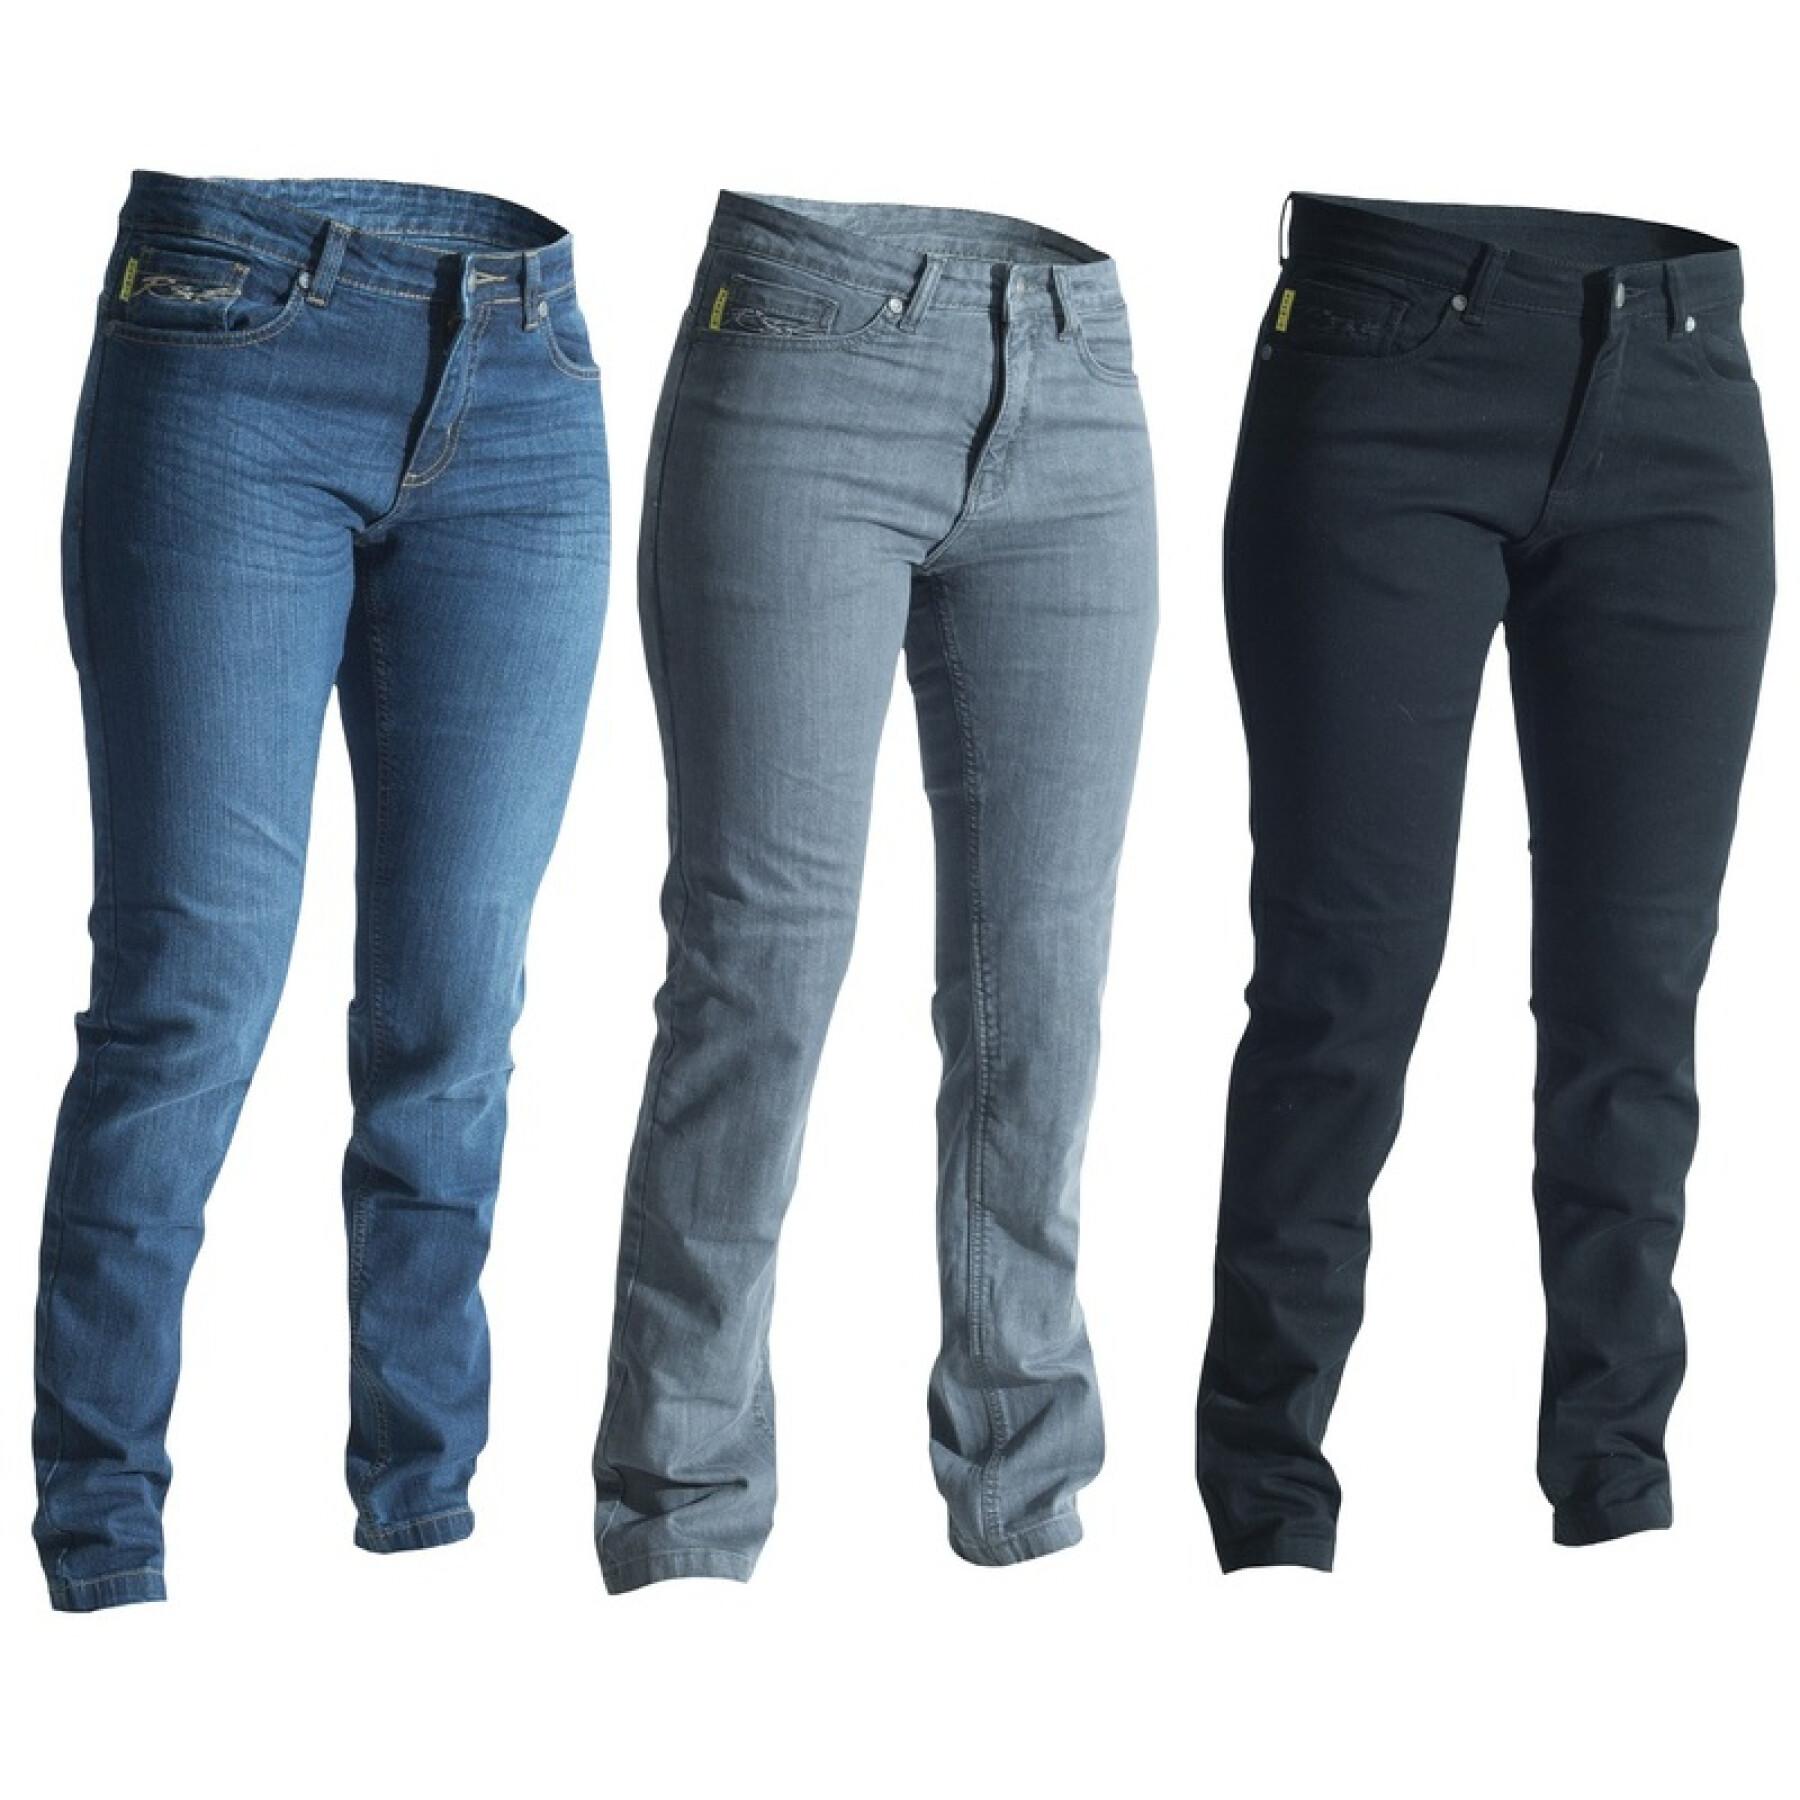 Damskie skinny jeans RST Aramid